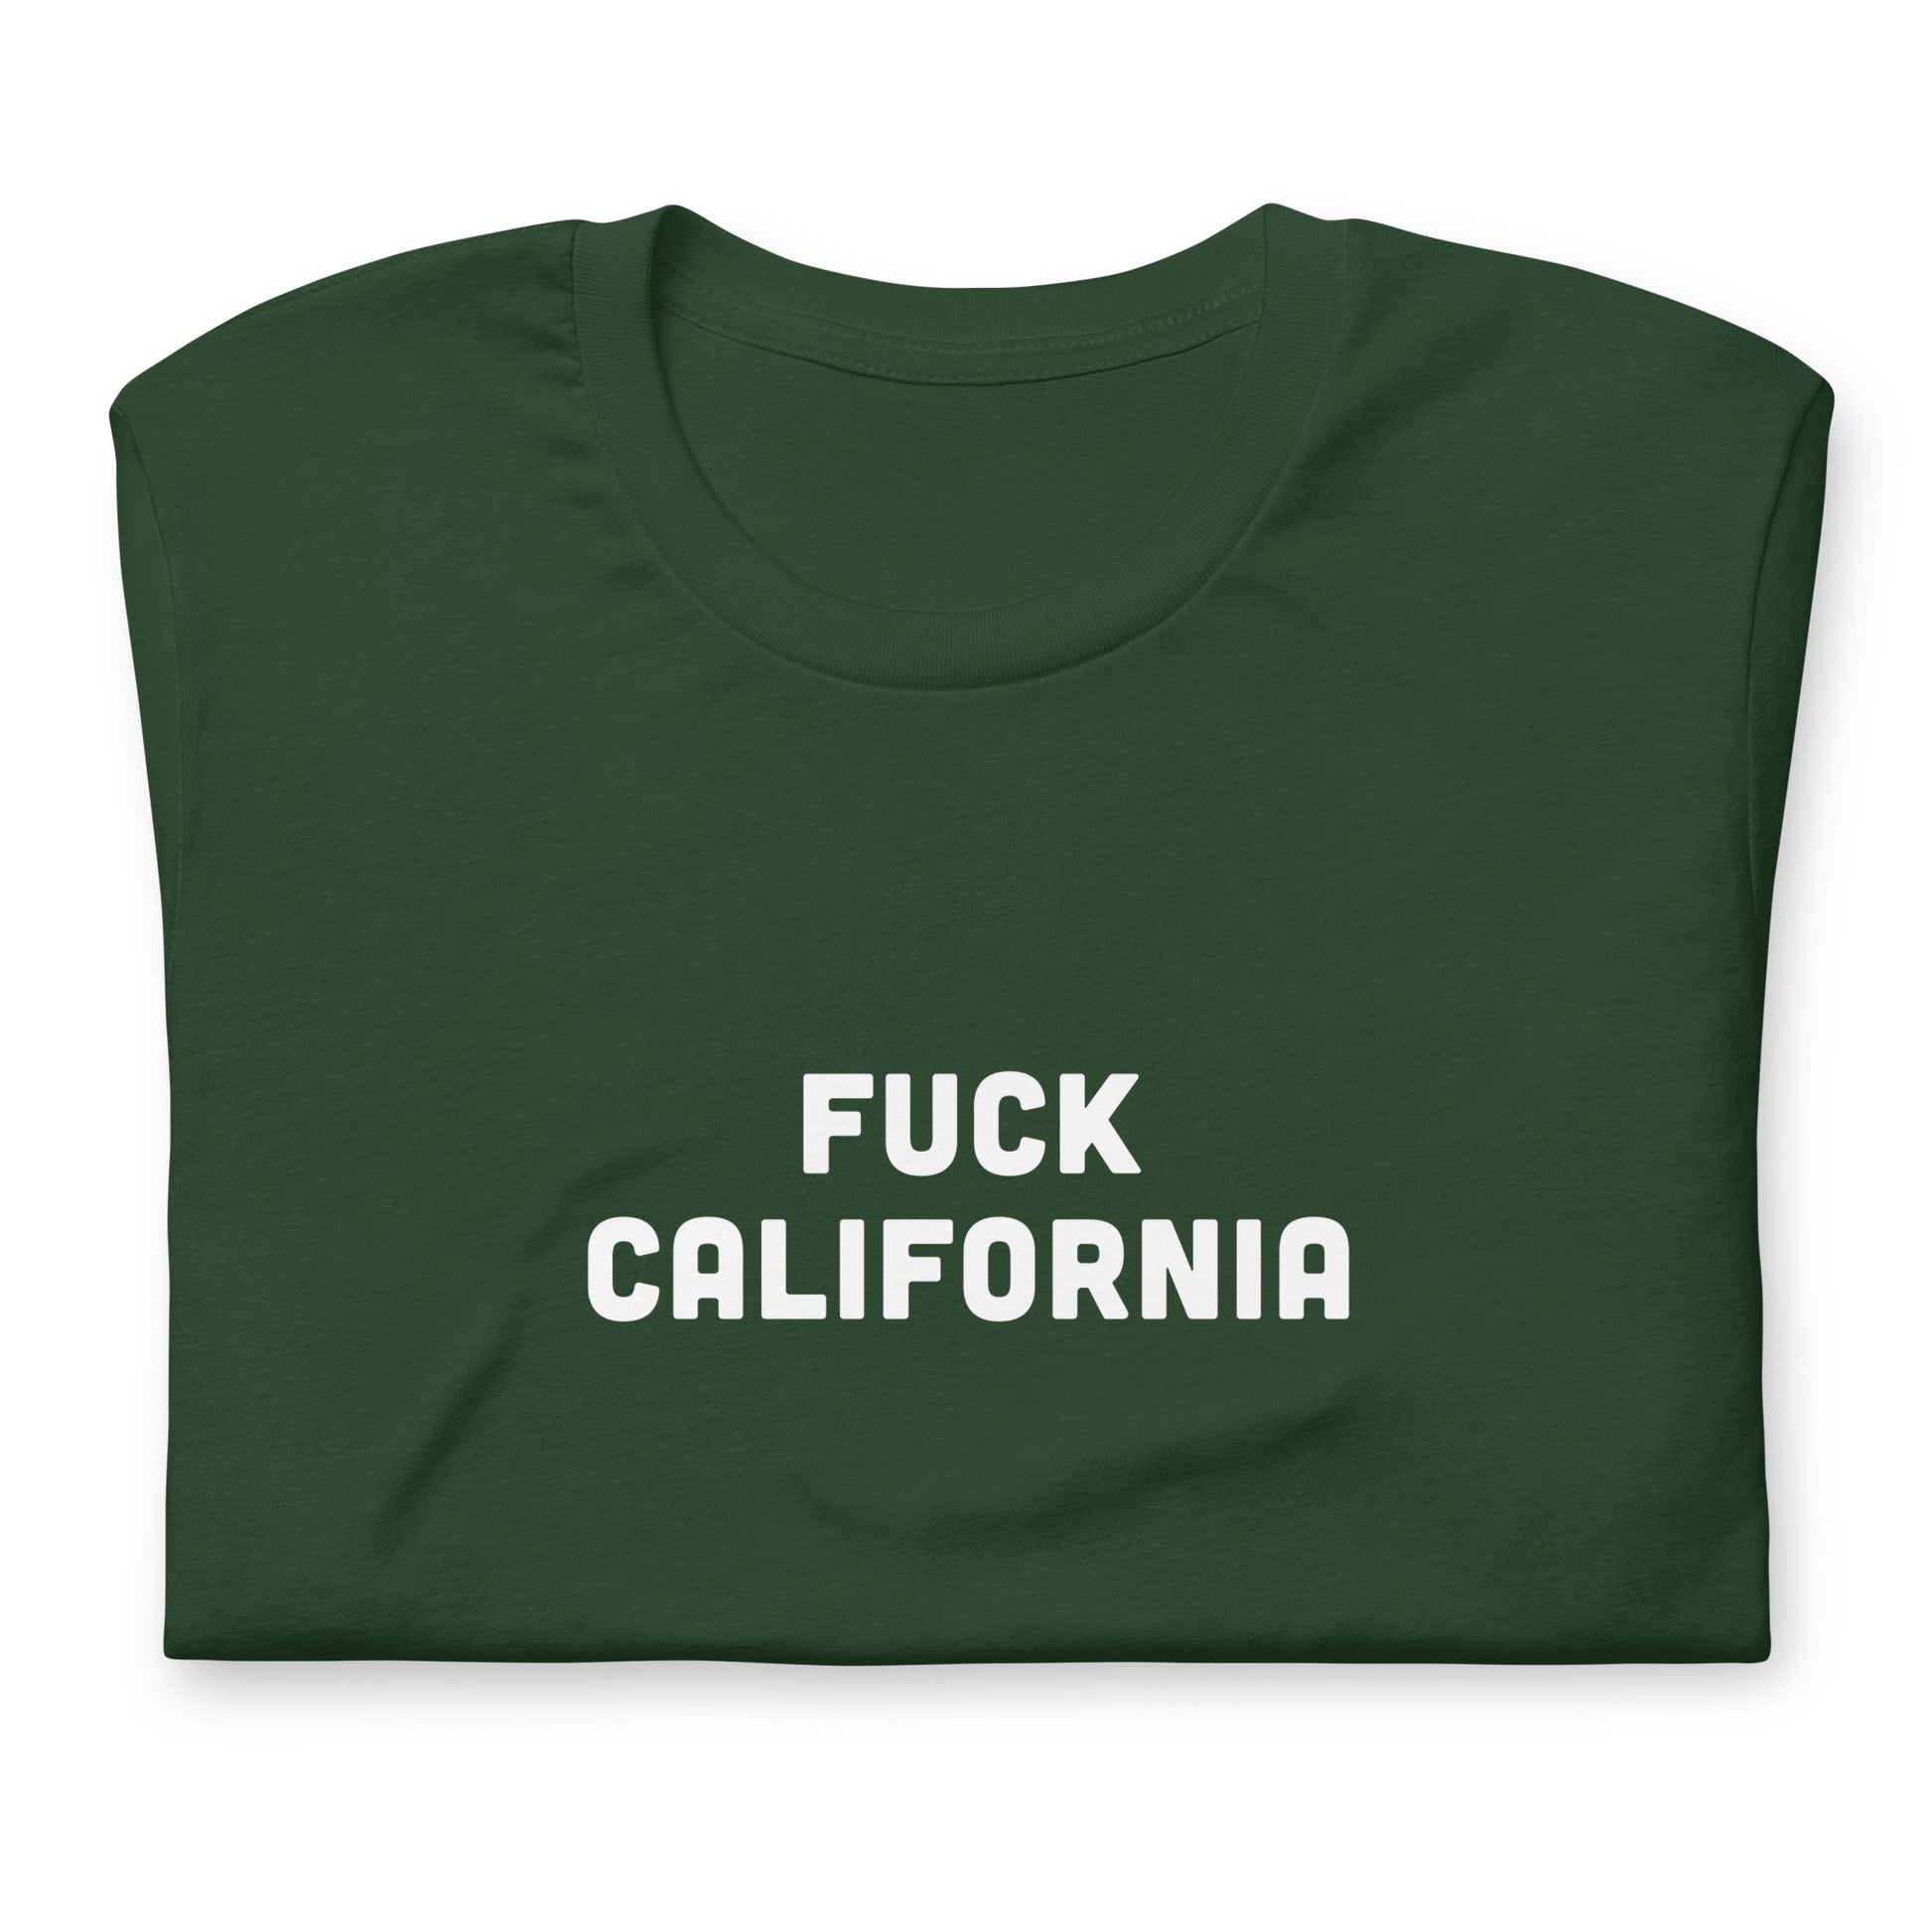 Fuck California T-Shirt Size XL Color Black